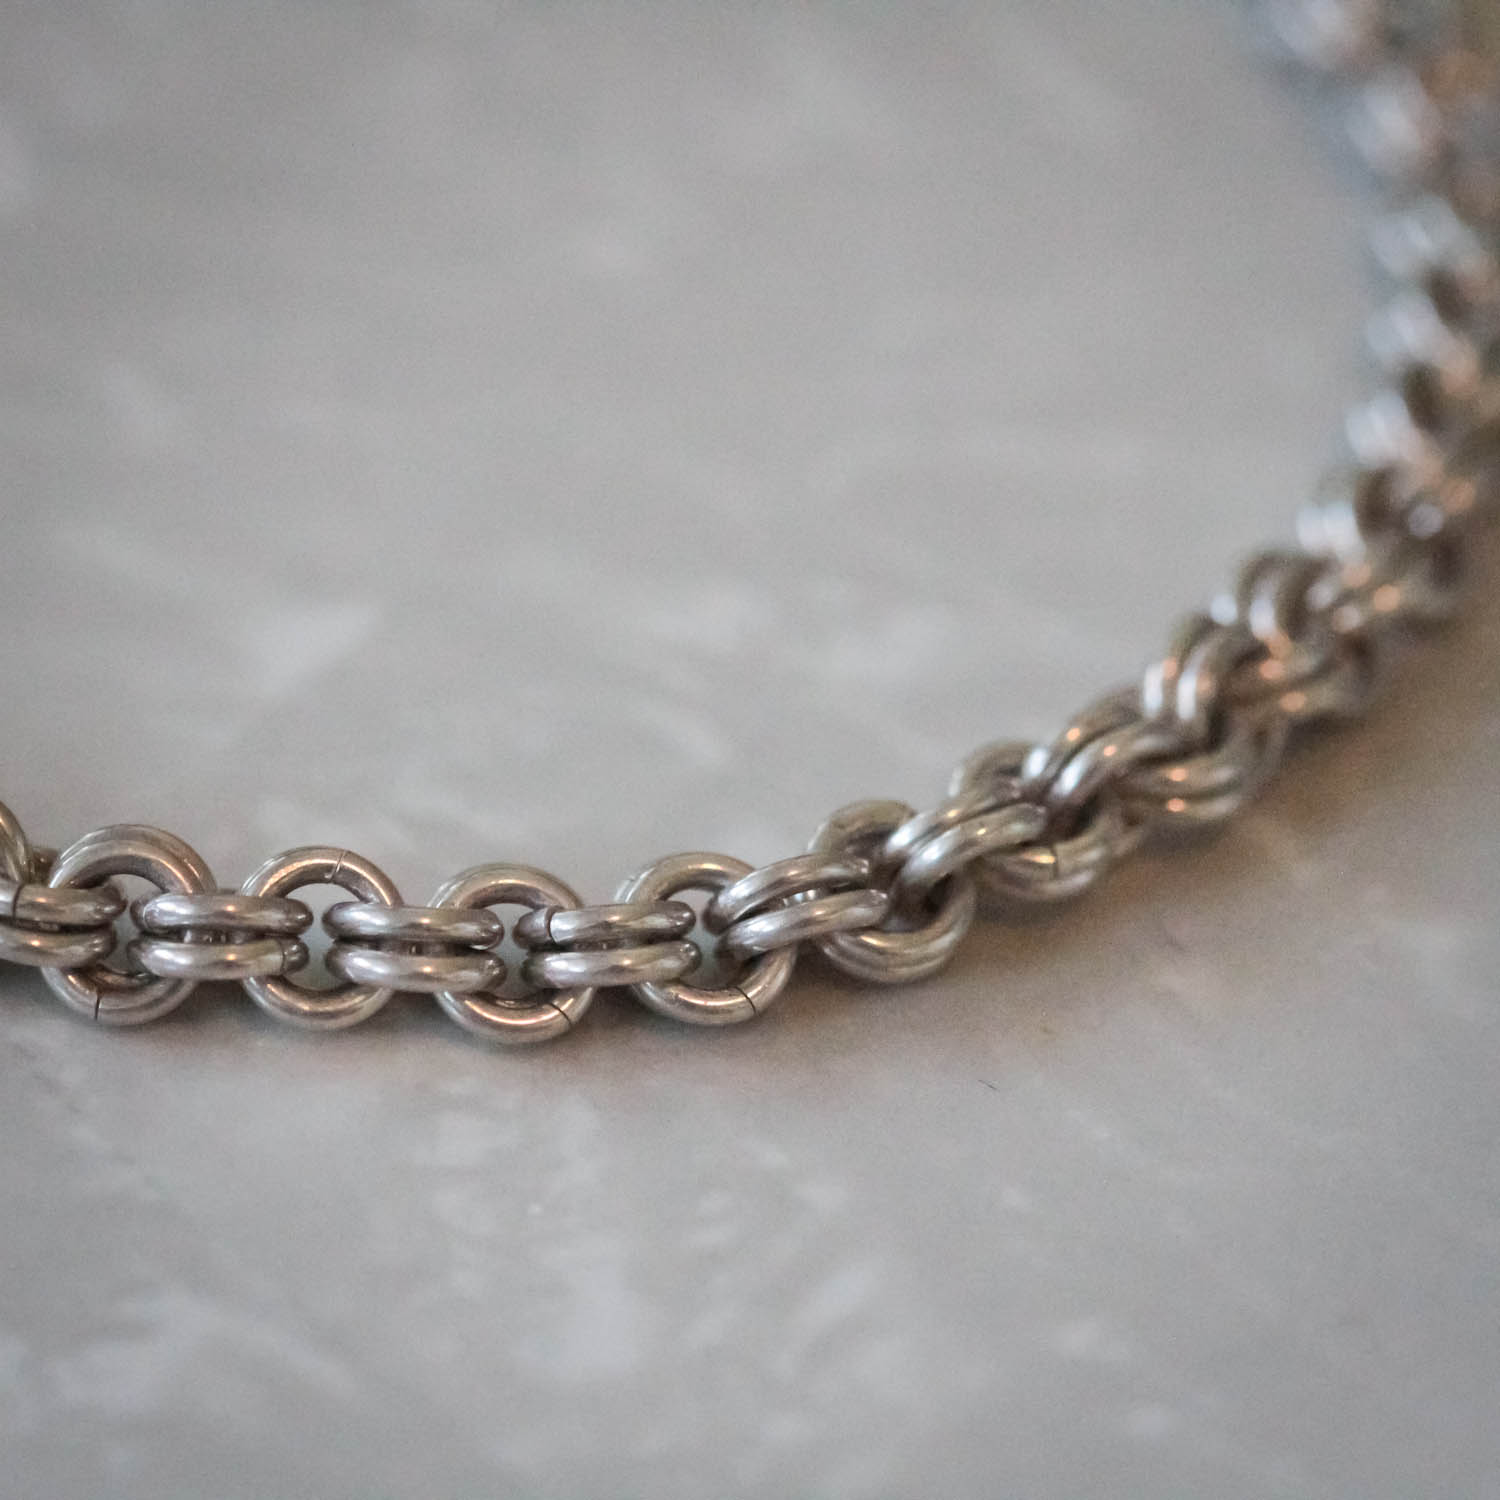 Handmade sterling silver chain